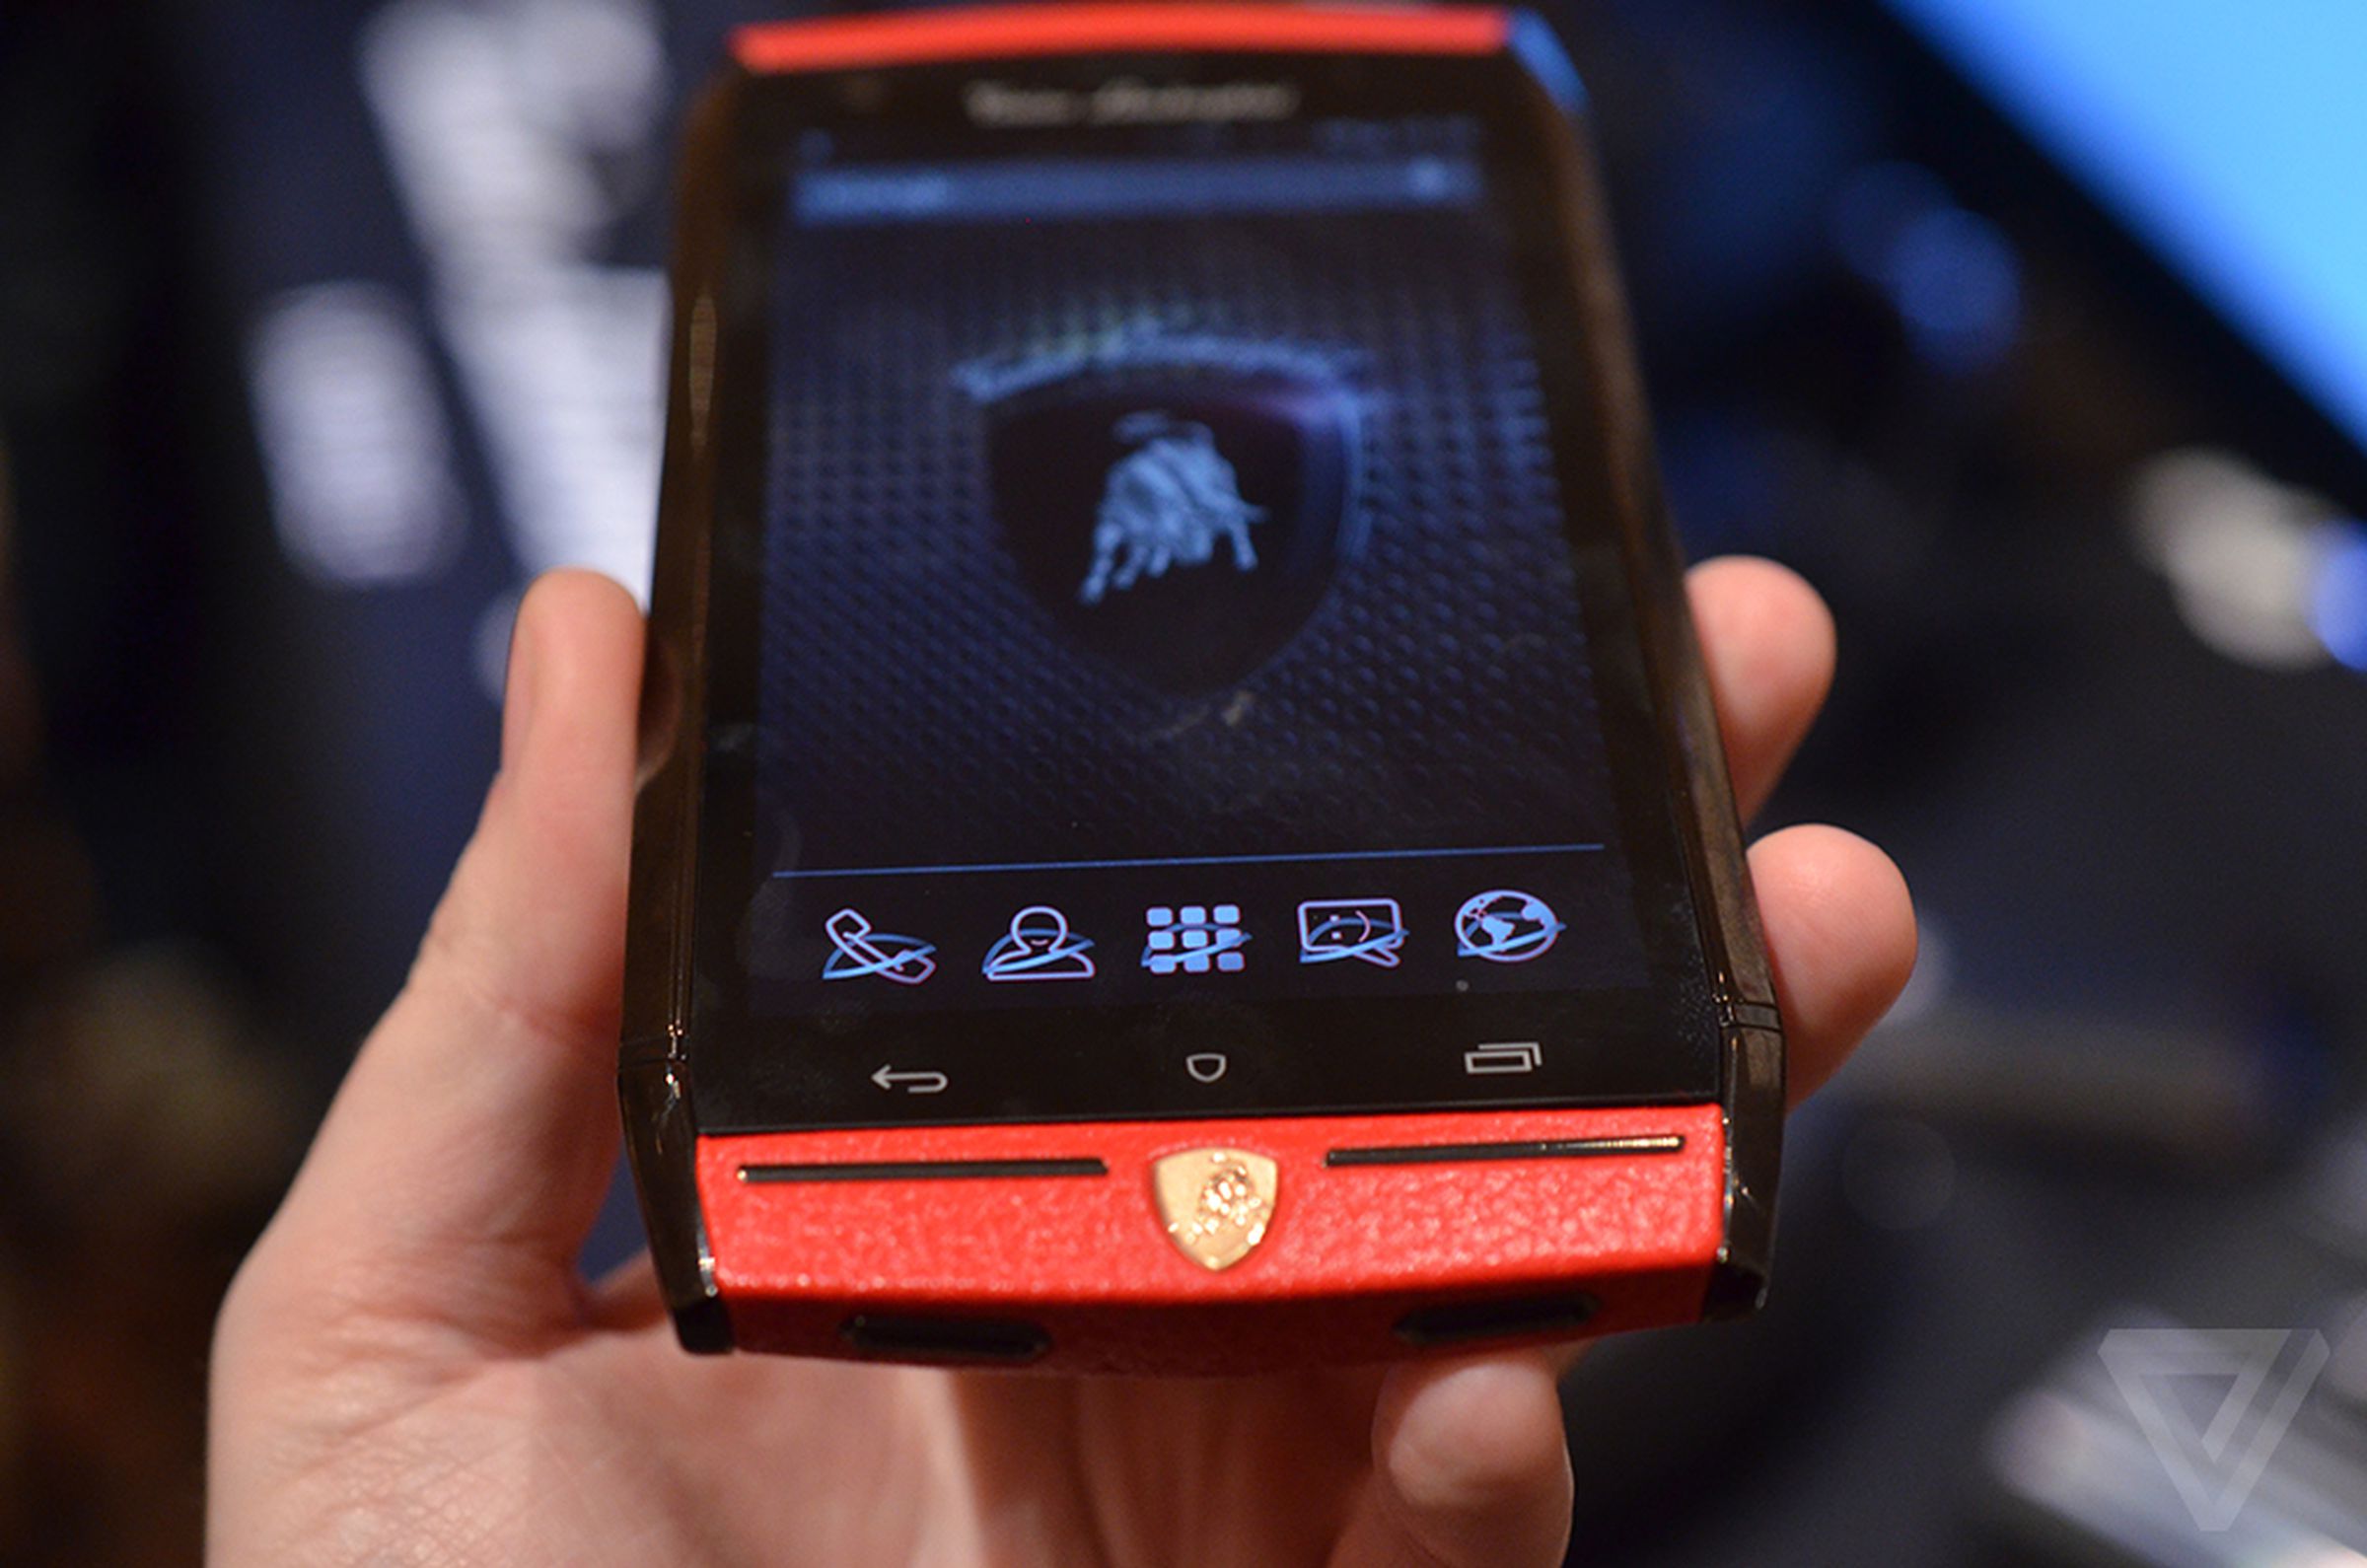 Tonino Lamborghini's 88 Tauri phone hands-on photos